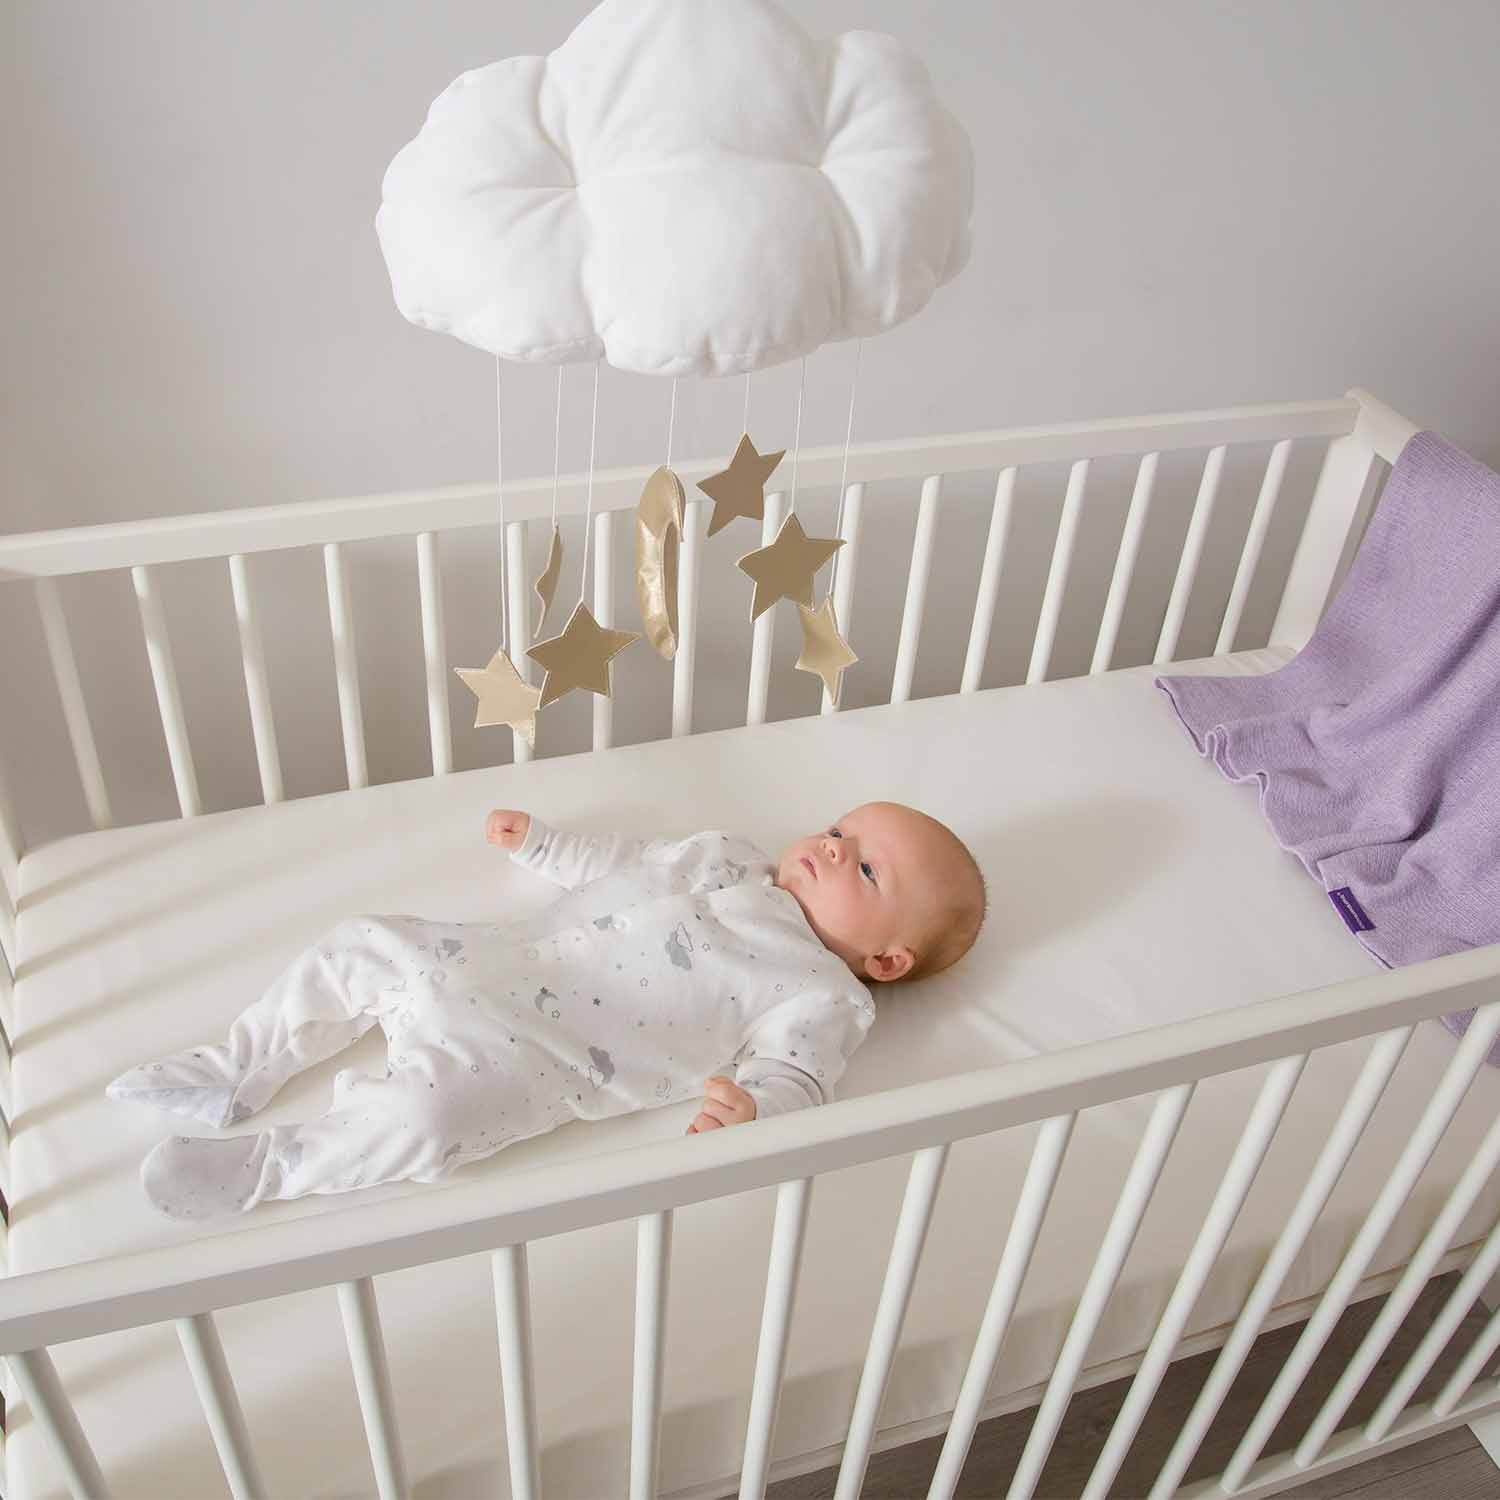 Waterproof Support Baby Mattress Cot & Cot Bed